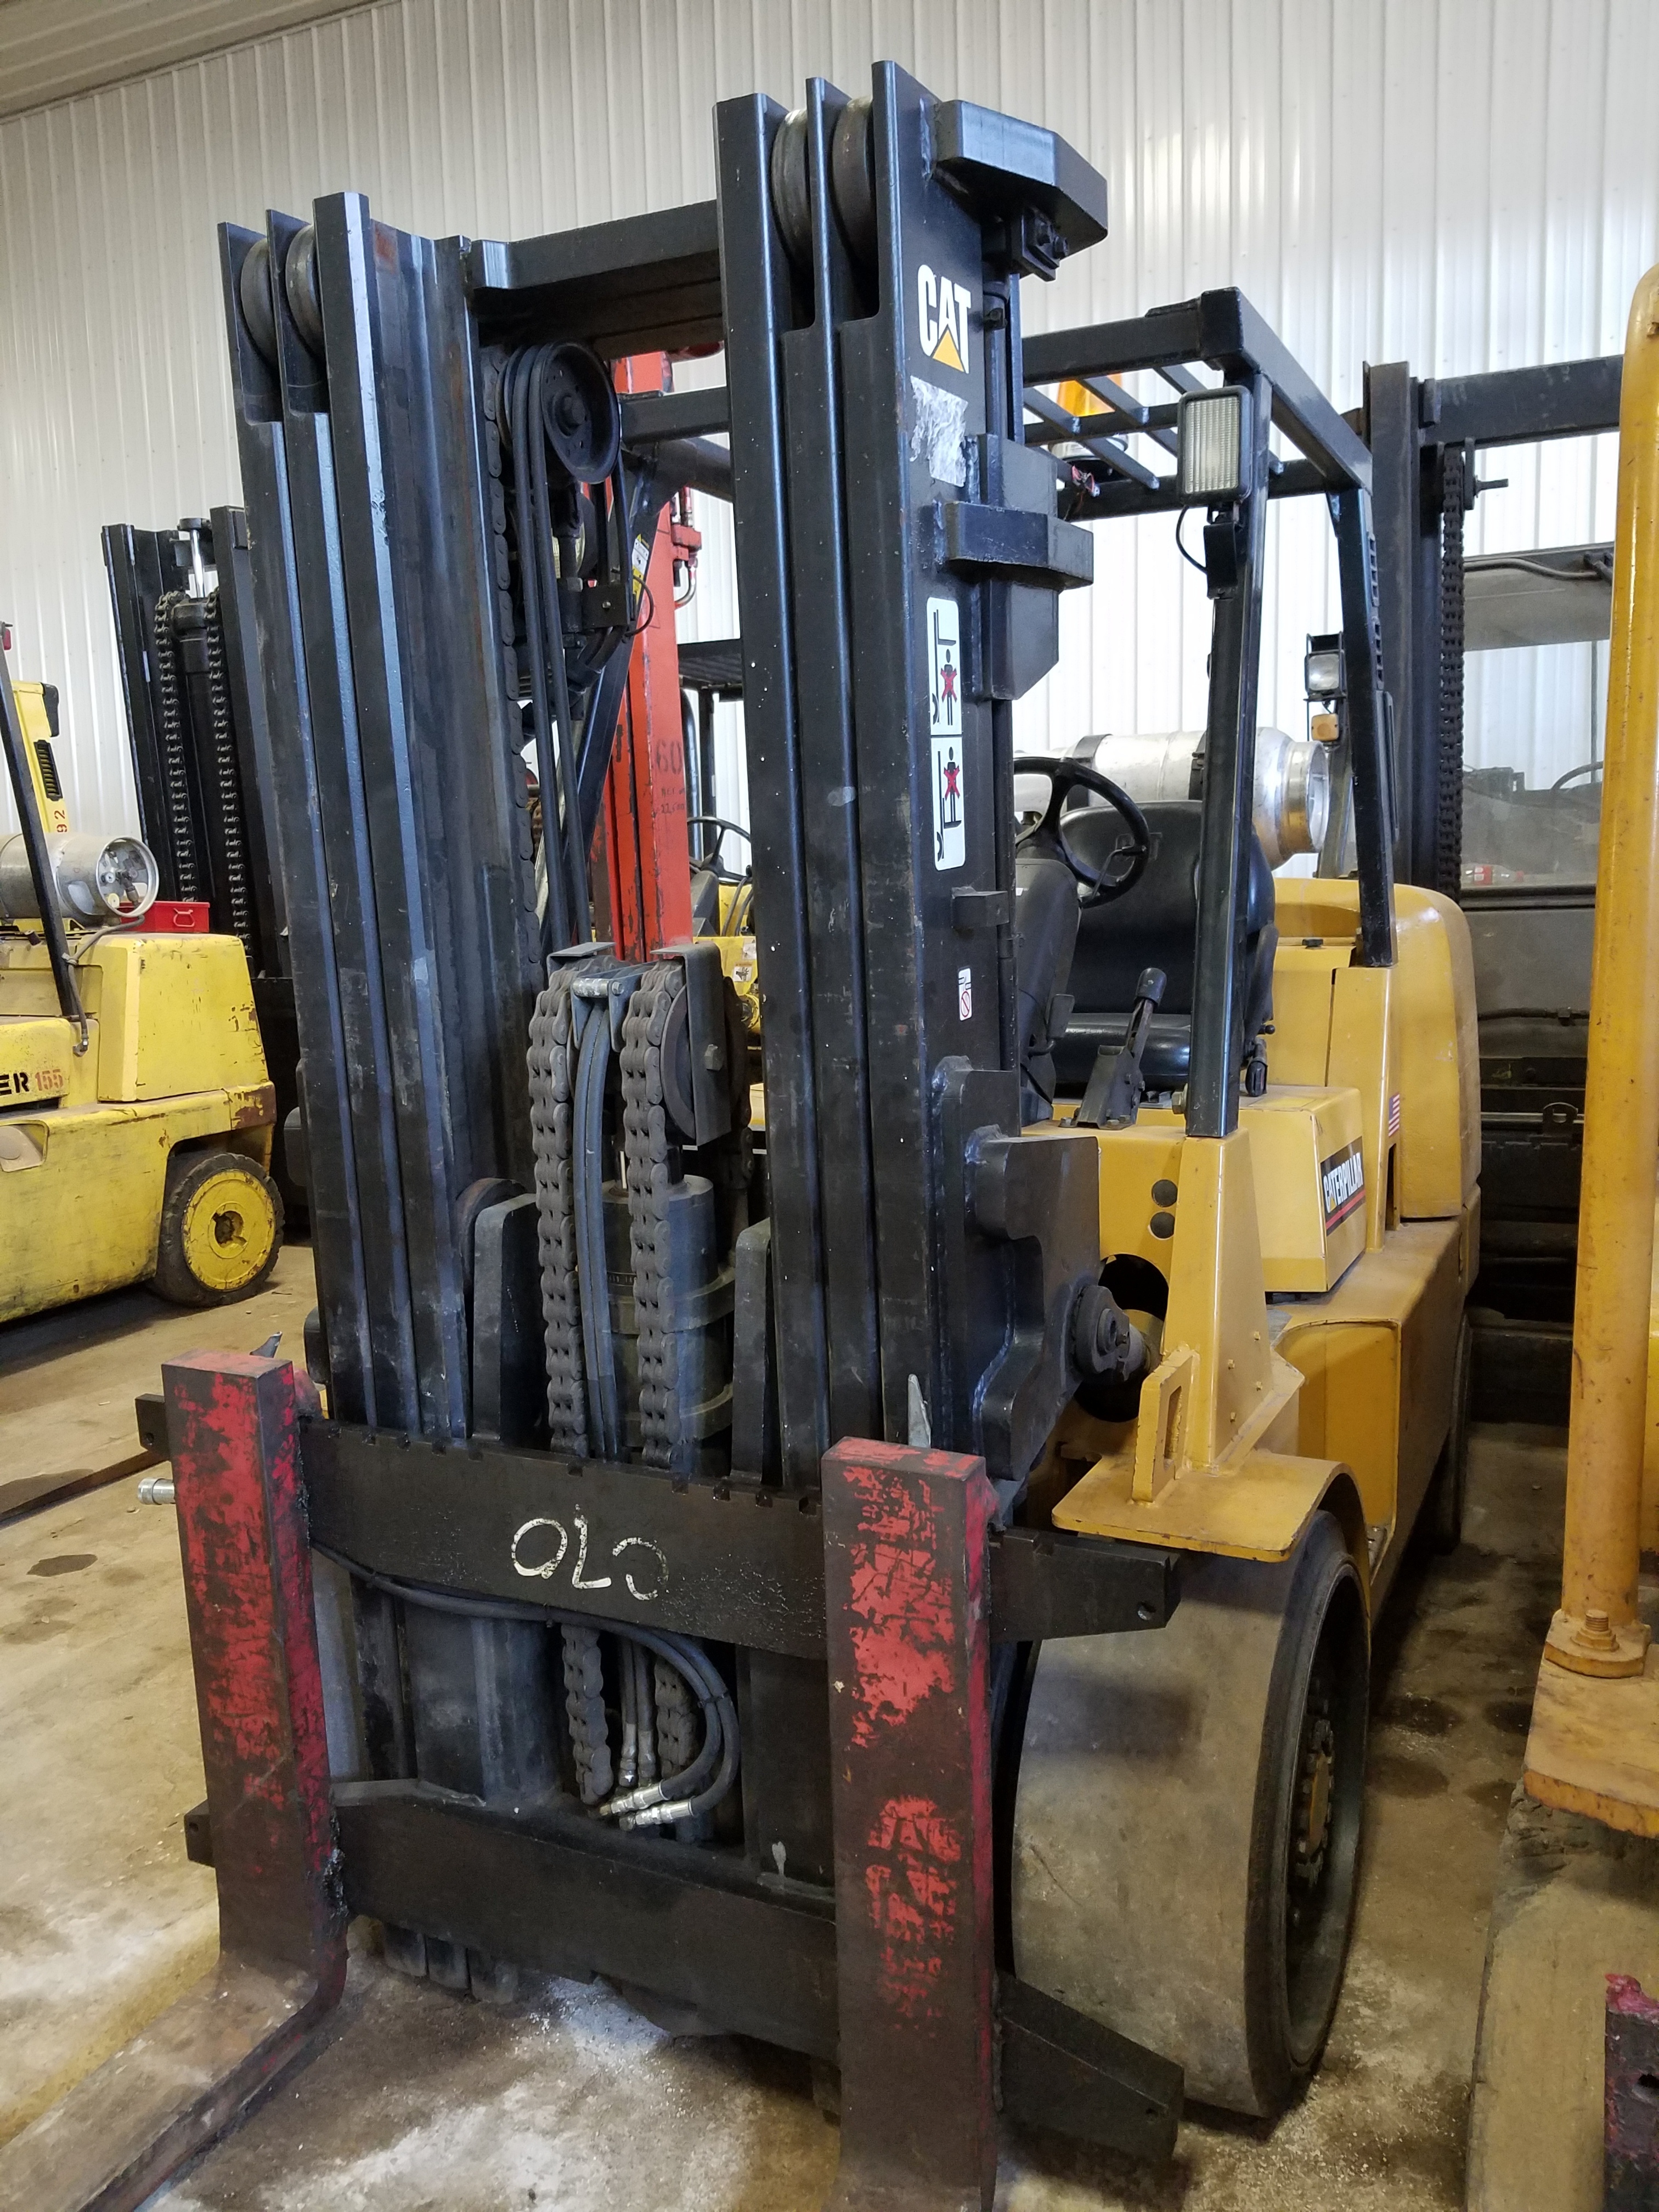 15,500lb. Capacity Cat Forklift For Sale